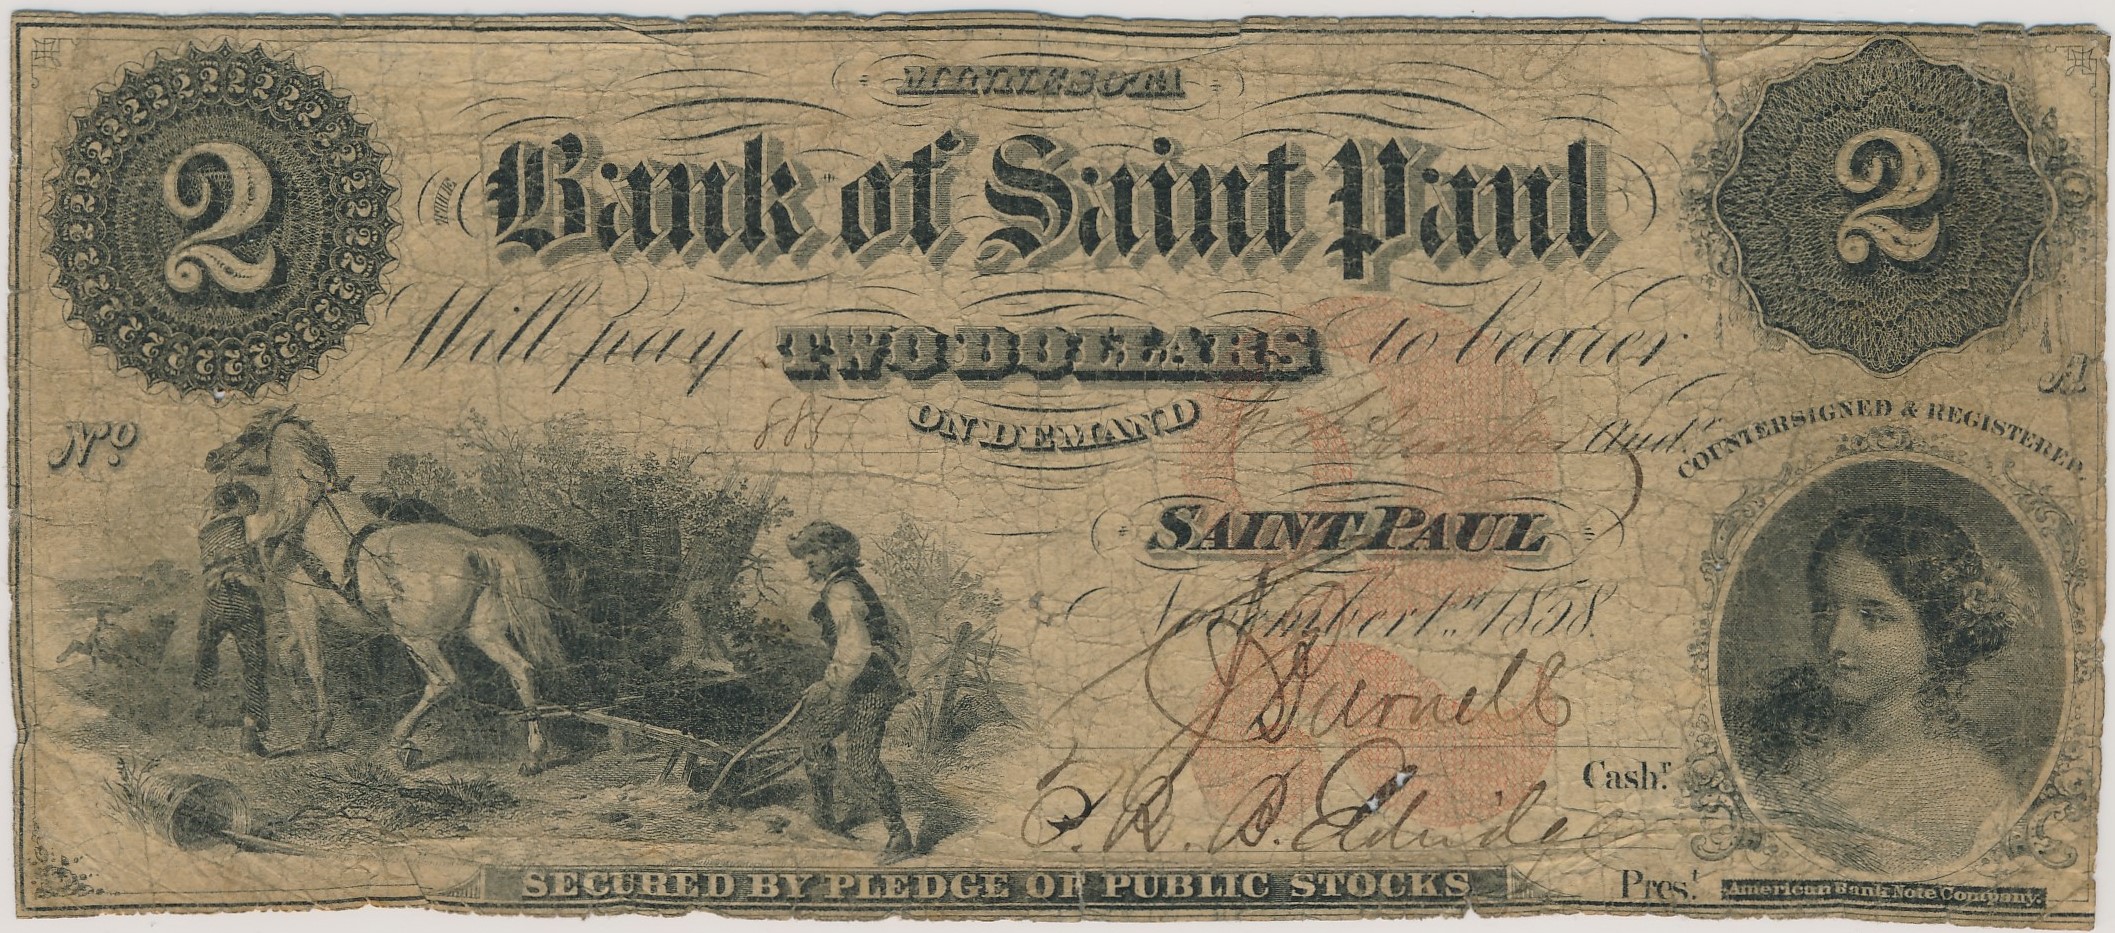 $2 Bank of Saint Paul